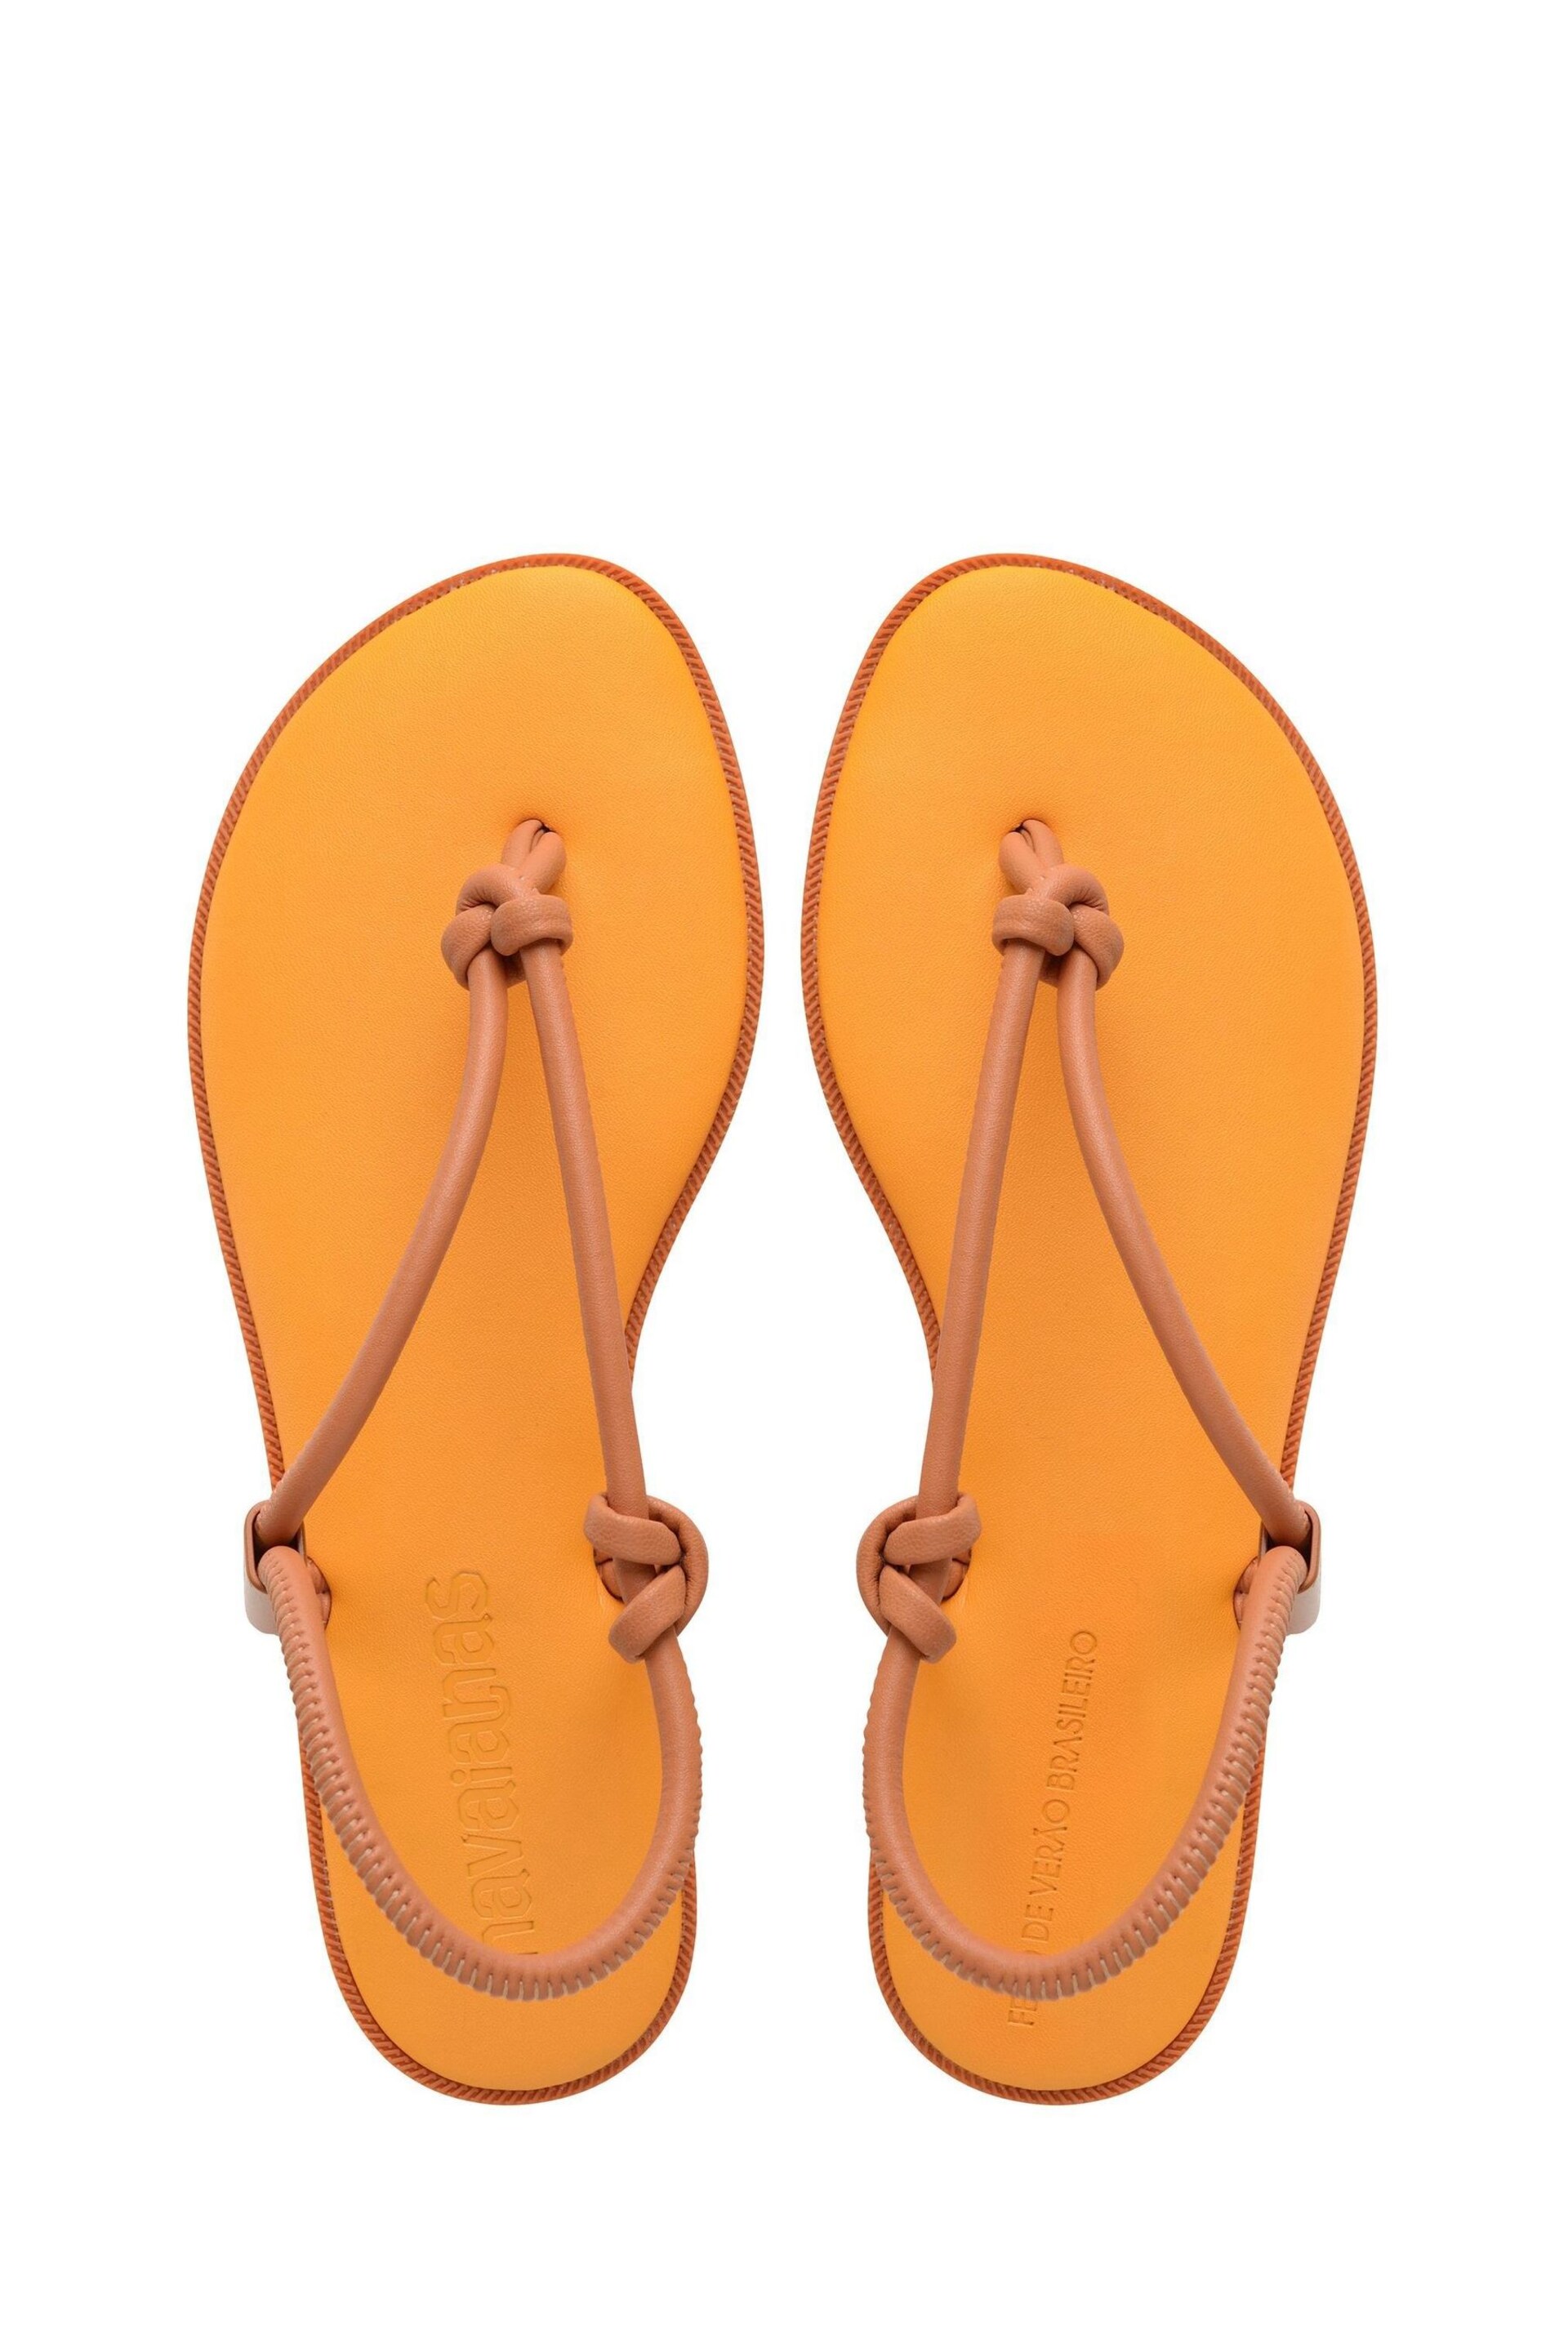 Havaianas Yellow Una Acai Sandals - Image 1 of 8